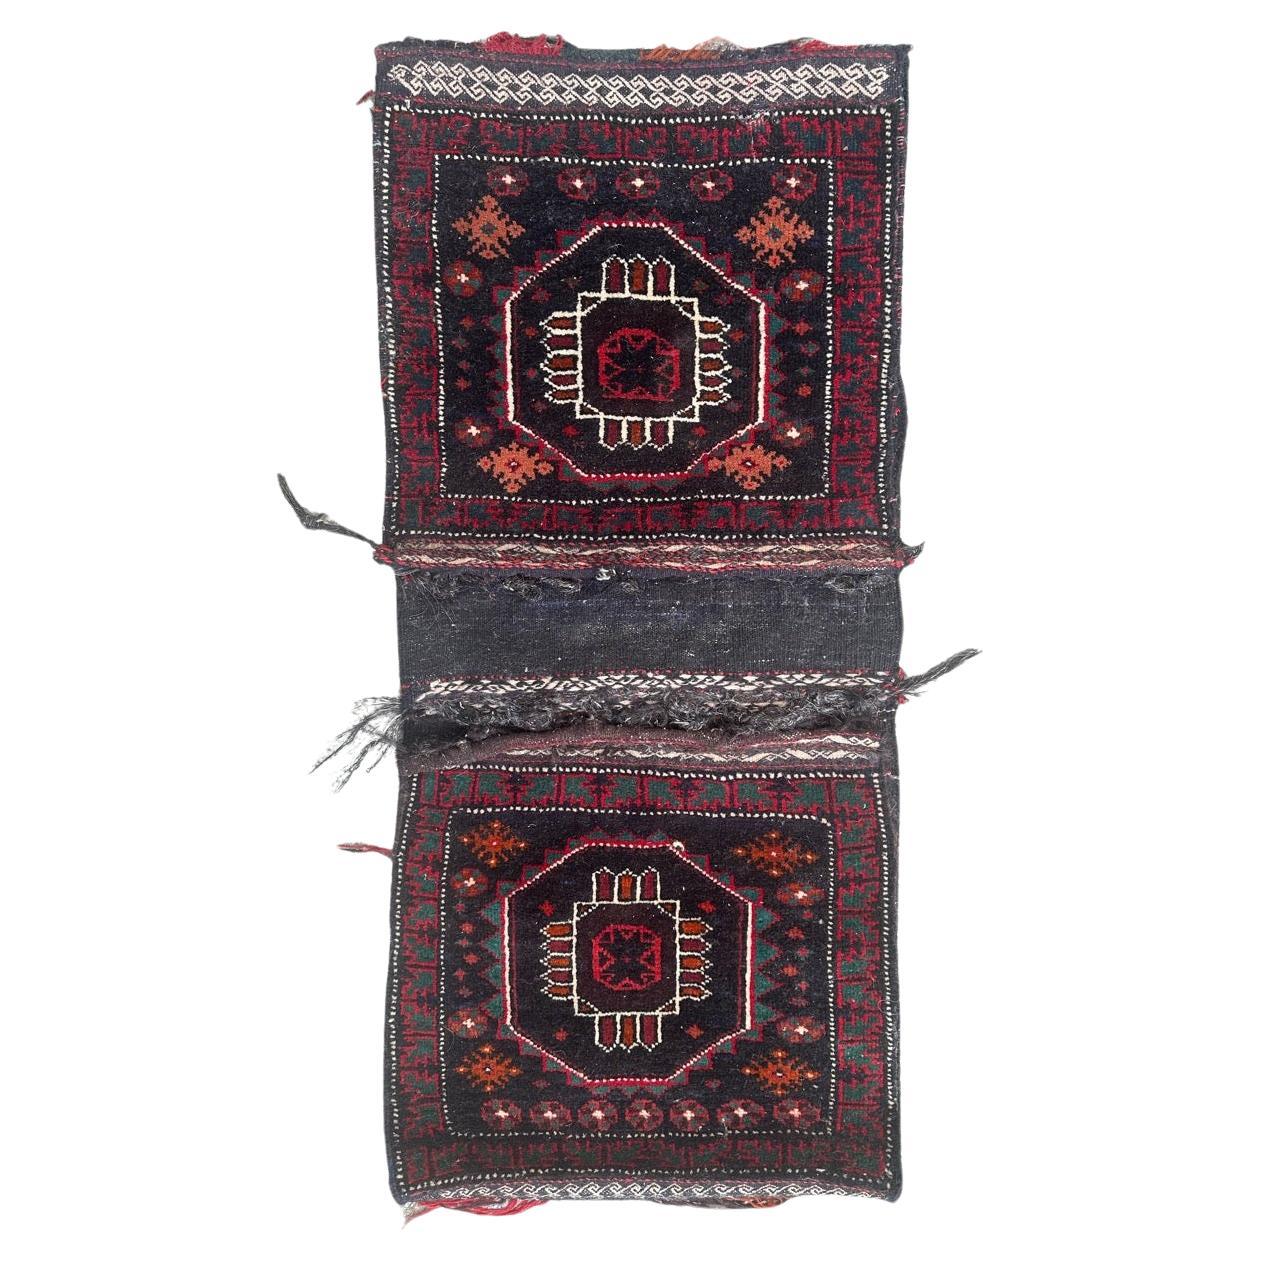 Bobyrug’s pretty mid century Turkmen chuval, horse cover, rug